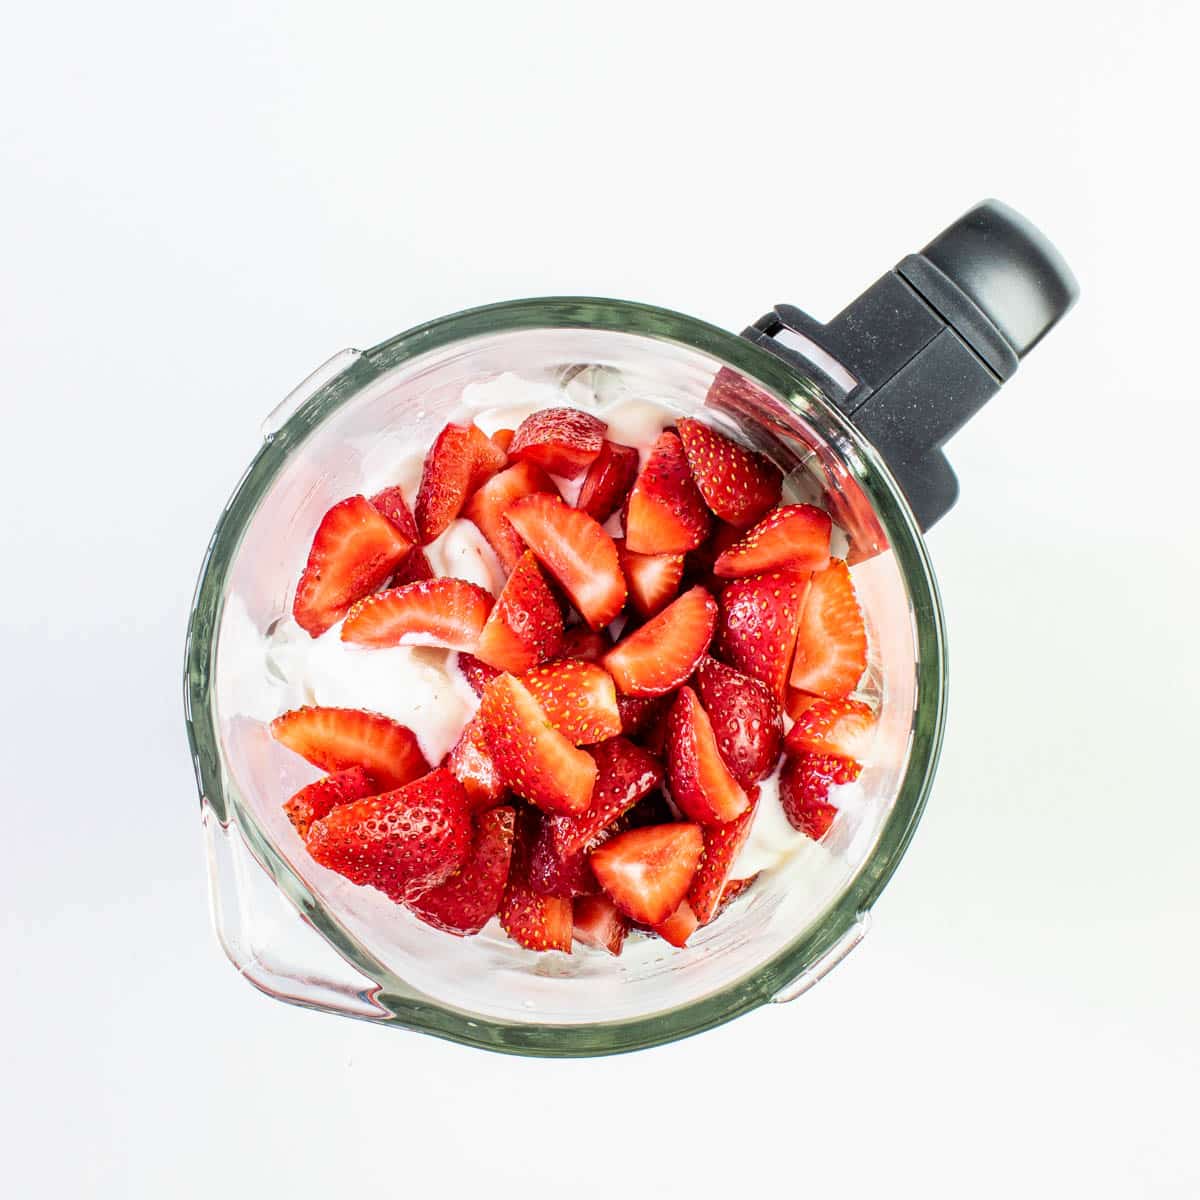 ingredients in a blender ready to make a strawberry milkshake.